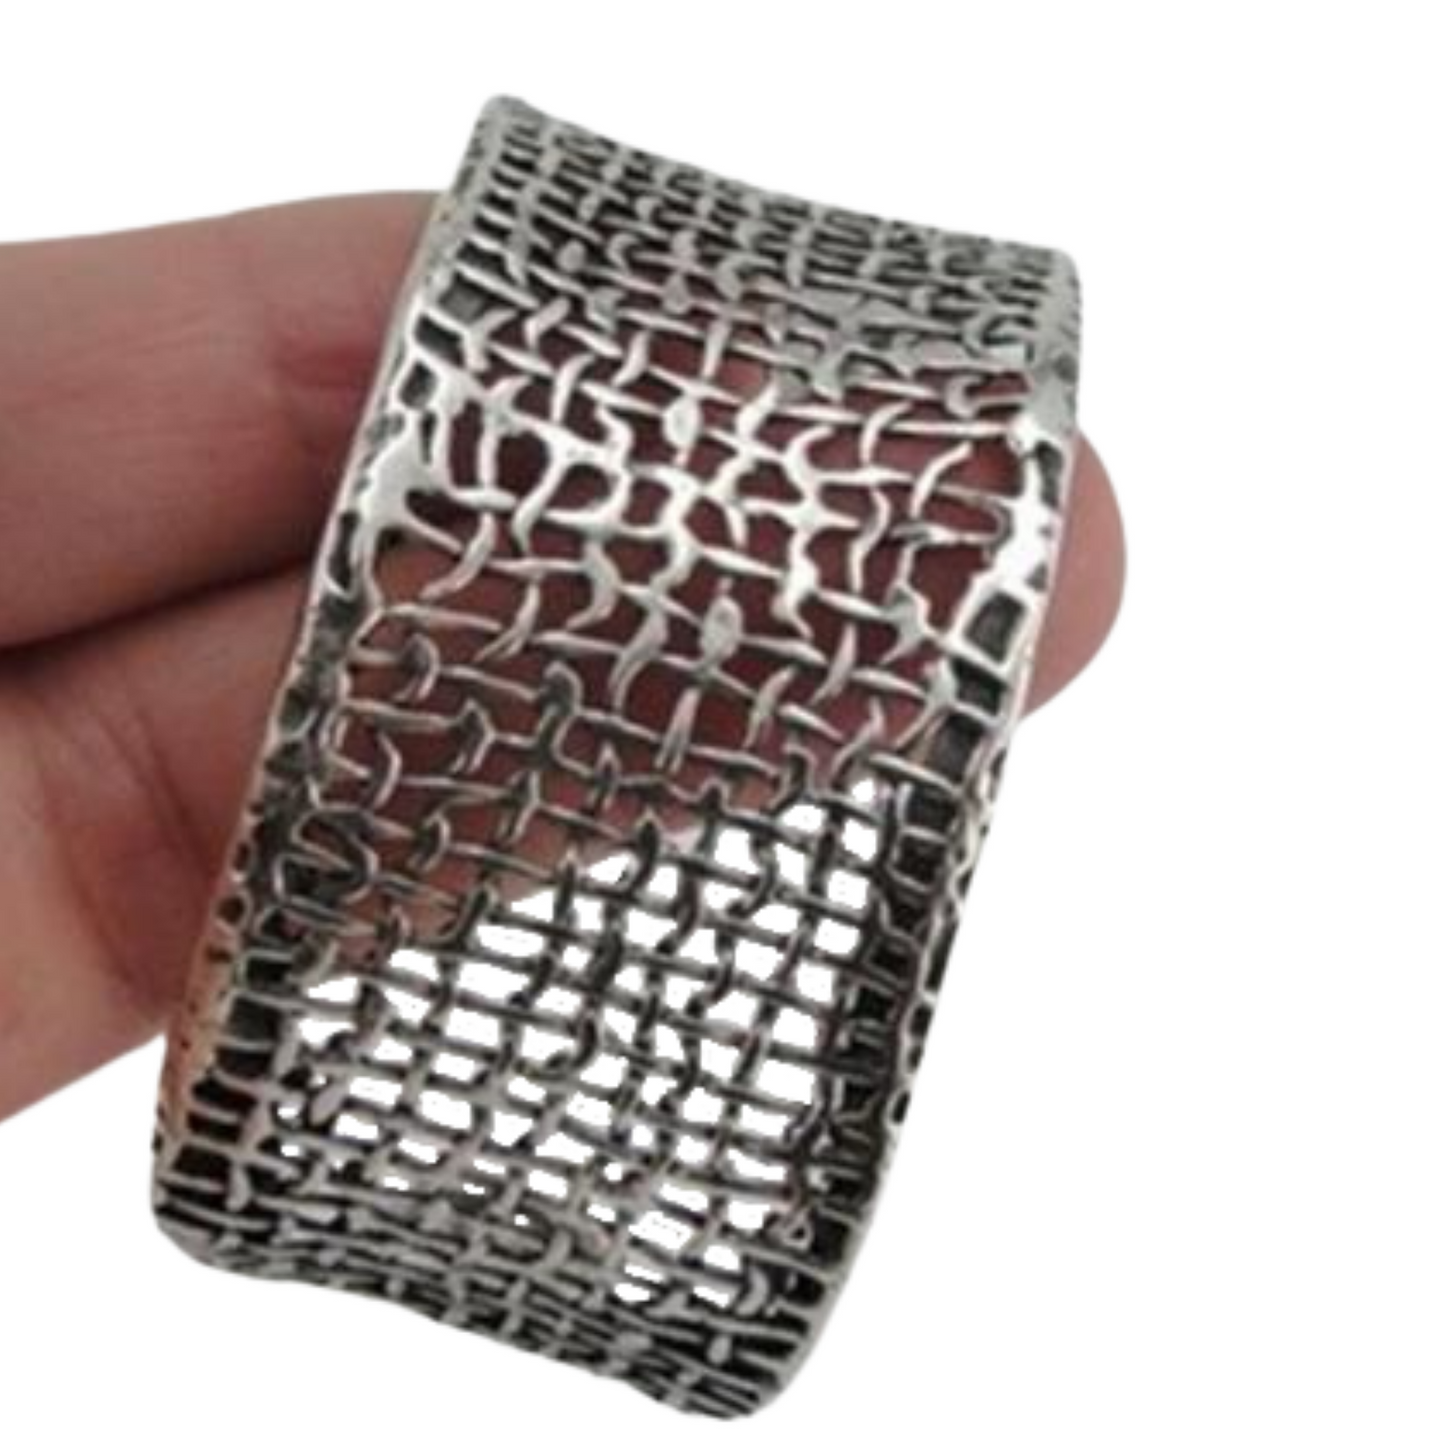 Solid Sterling Silver, Wide Net Textured Bracelet.